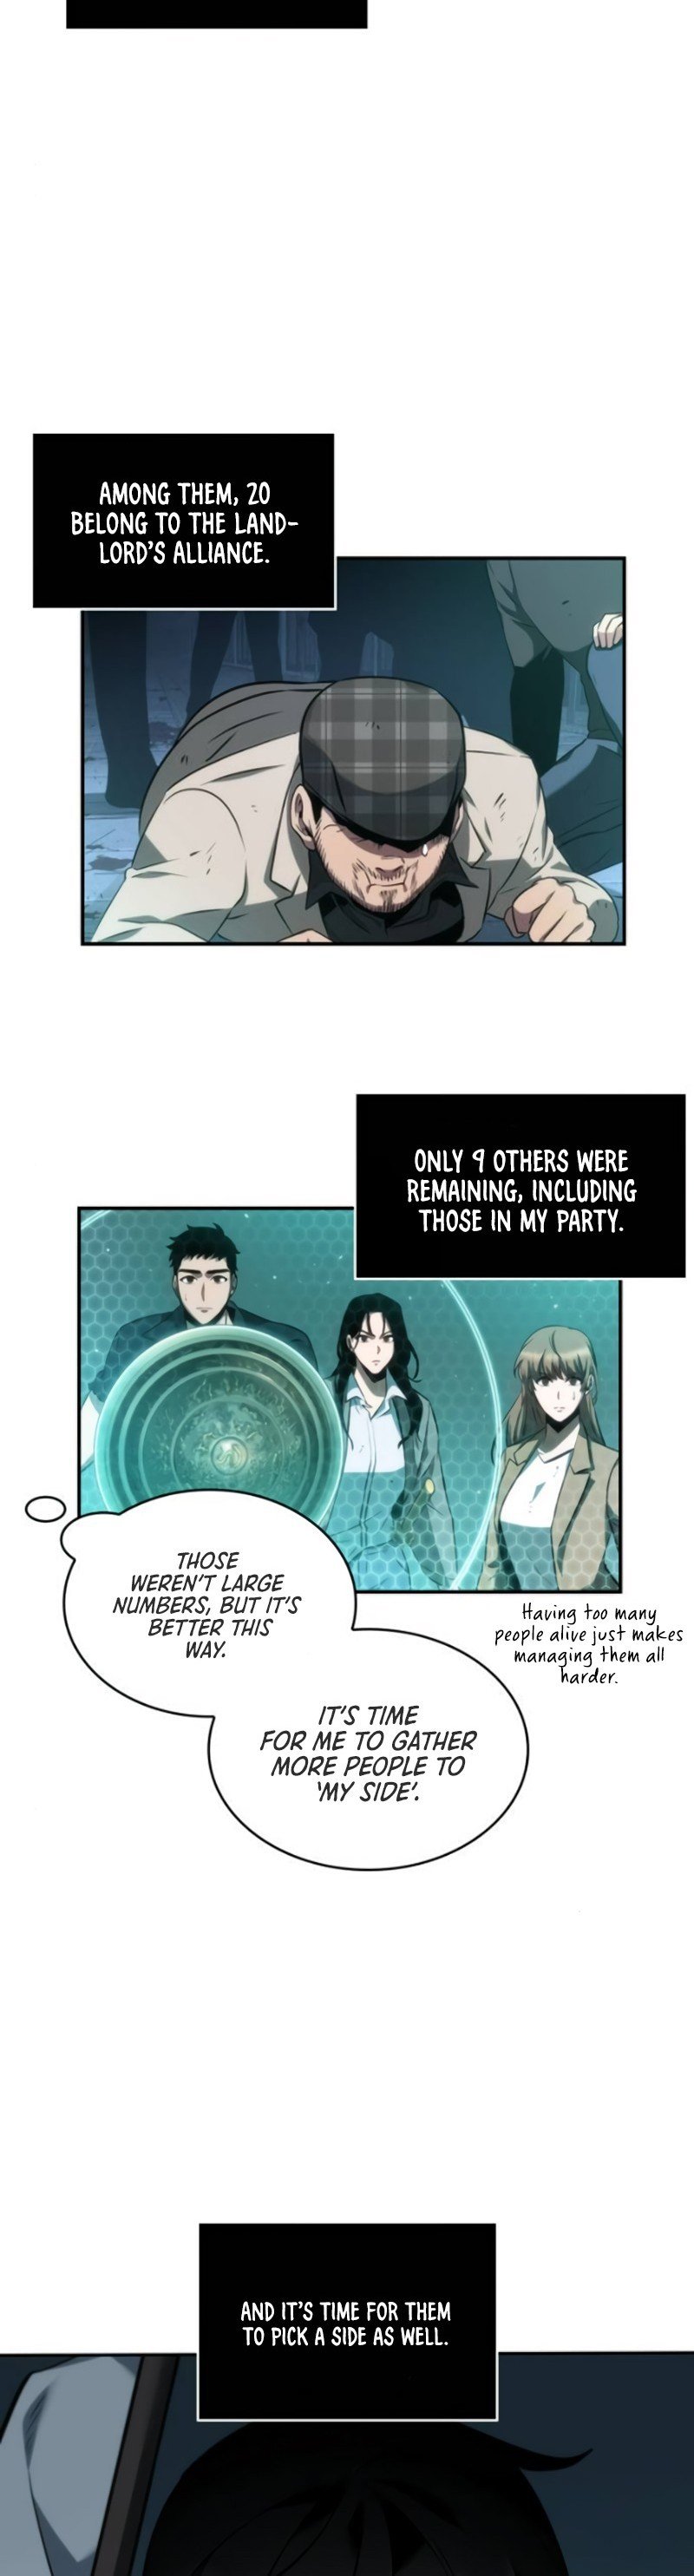 Omniscient Reader's View Manga Manga Chapter - 44 - image 46